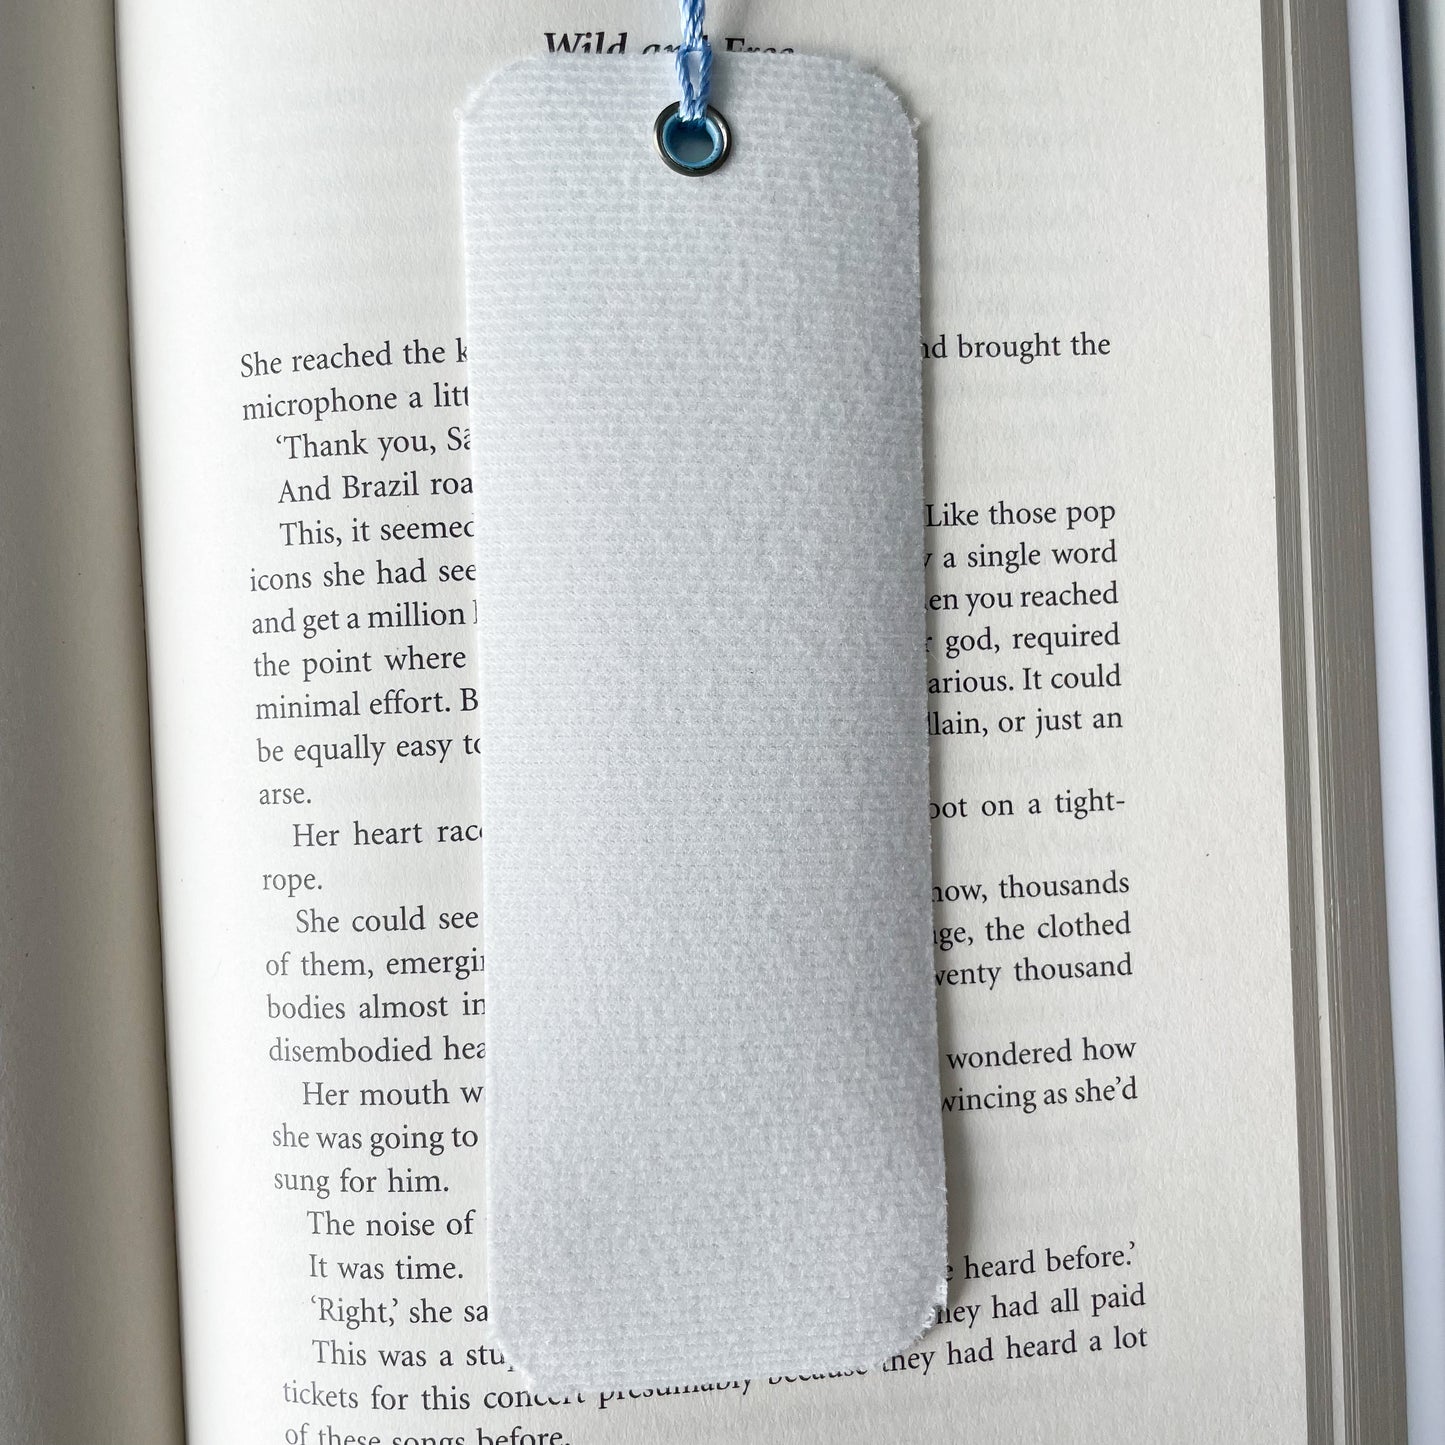 Blueberry Bookmark